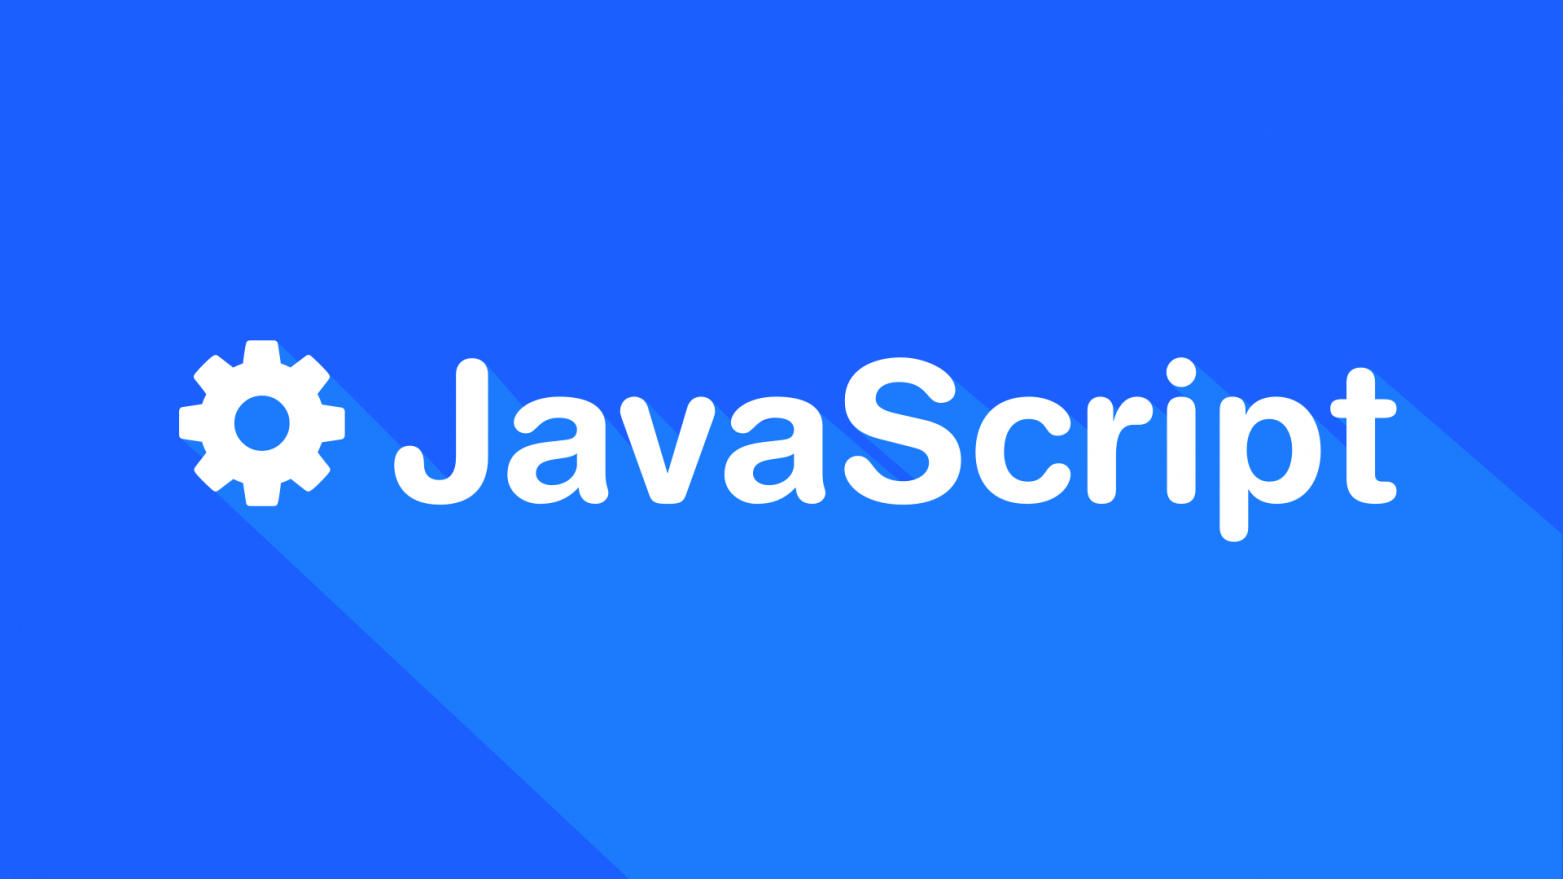 Javascript технологии. JAVASCRIPT. Js картинки. Js язык программирования. Джава скрипт логотип.